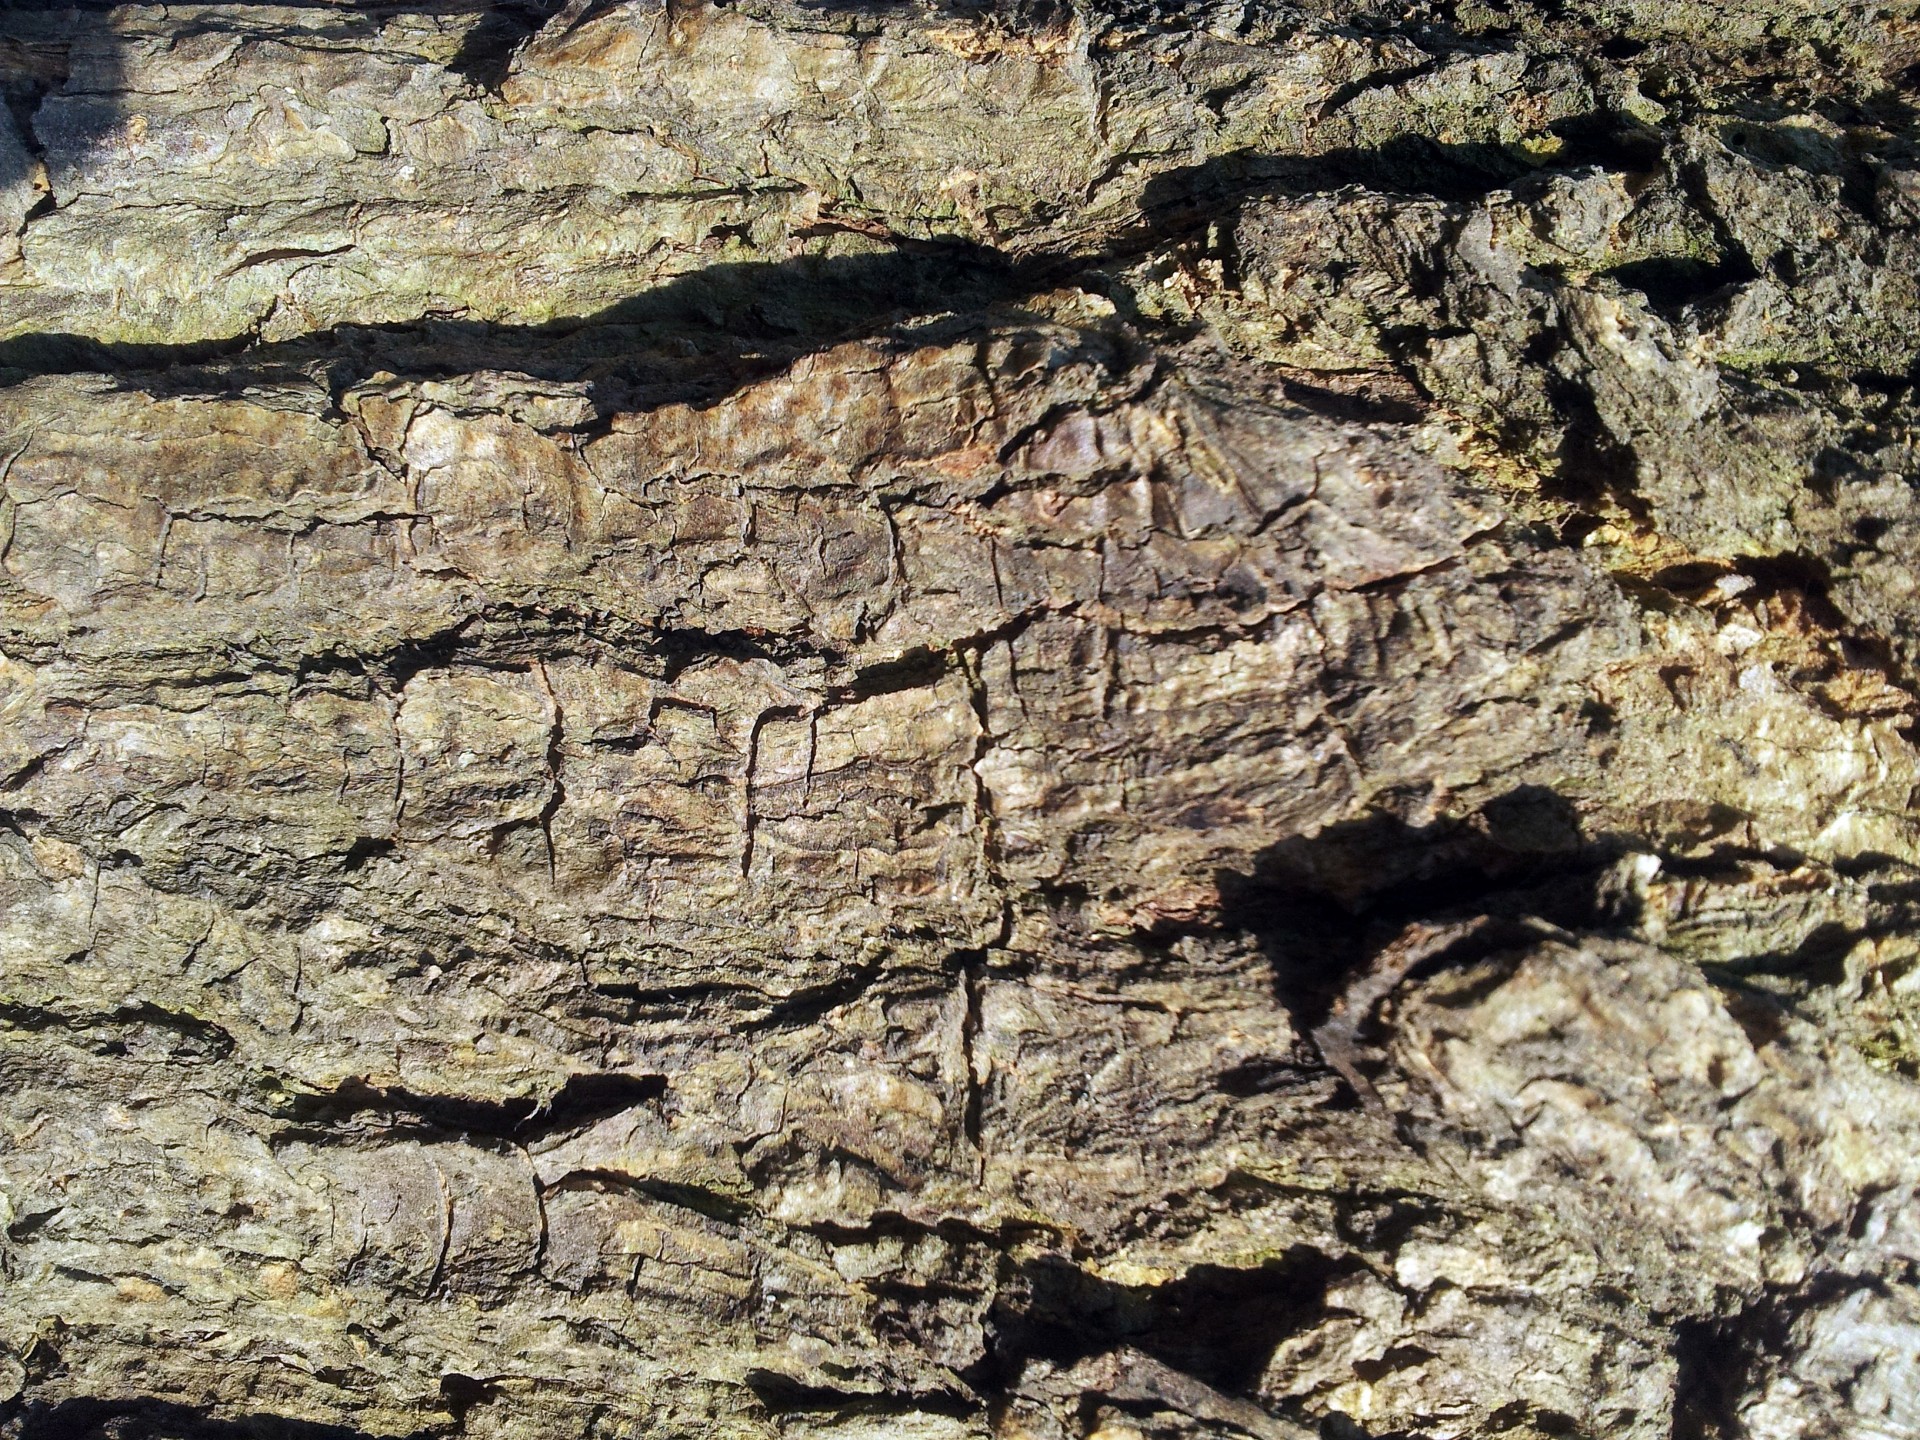 Old Tree Bark